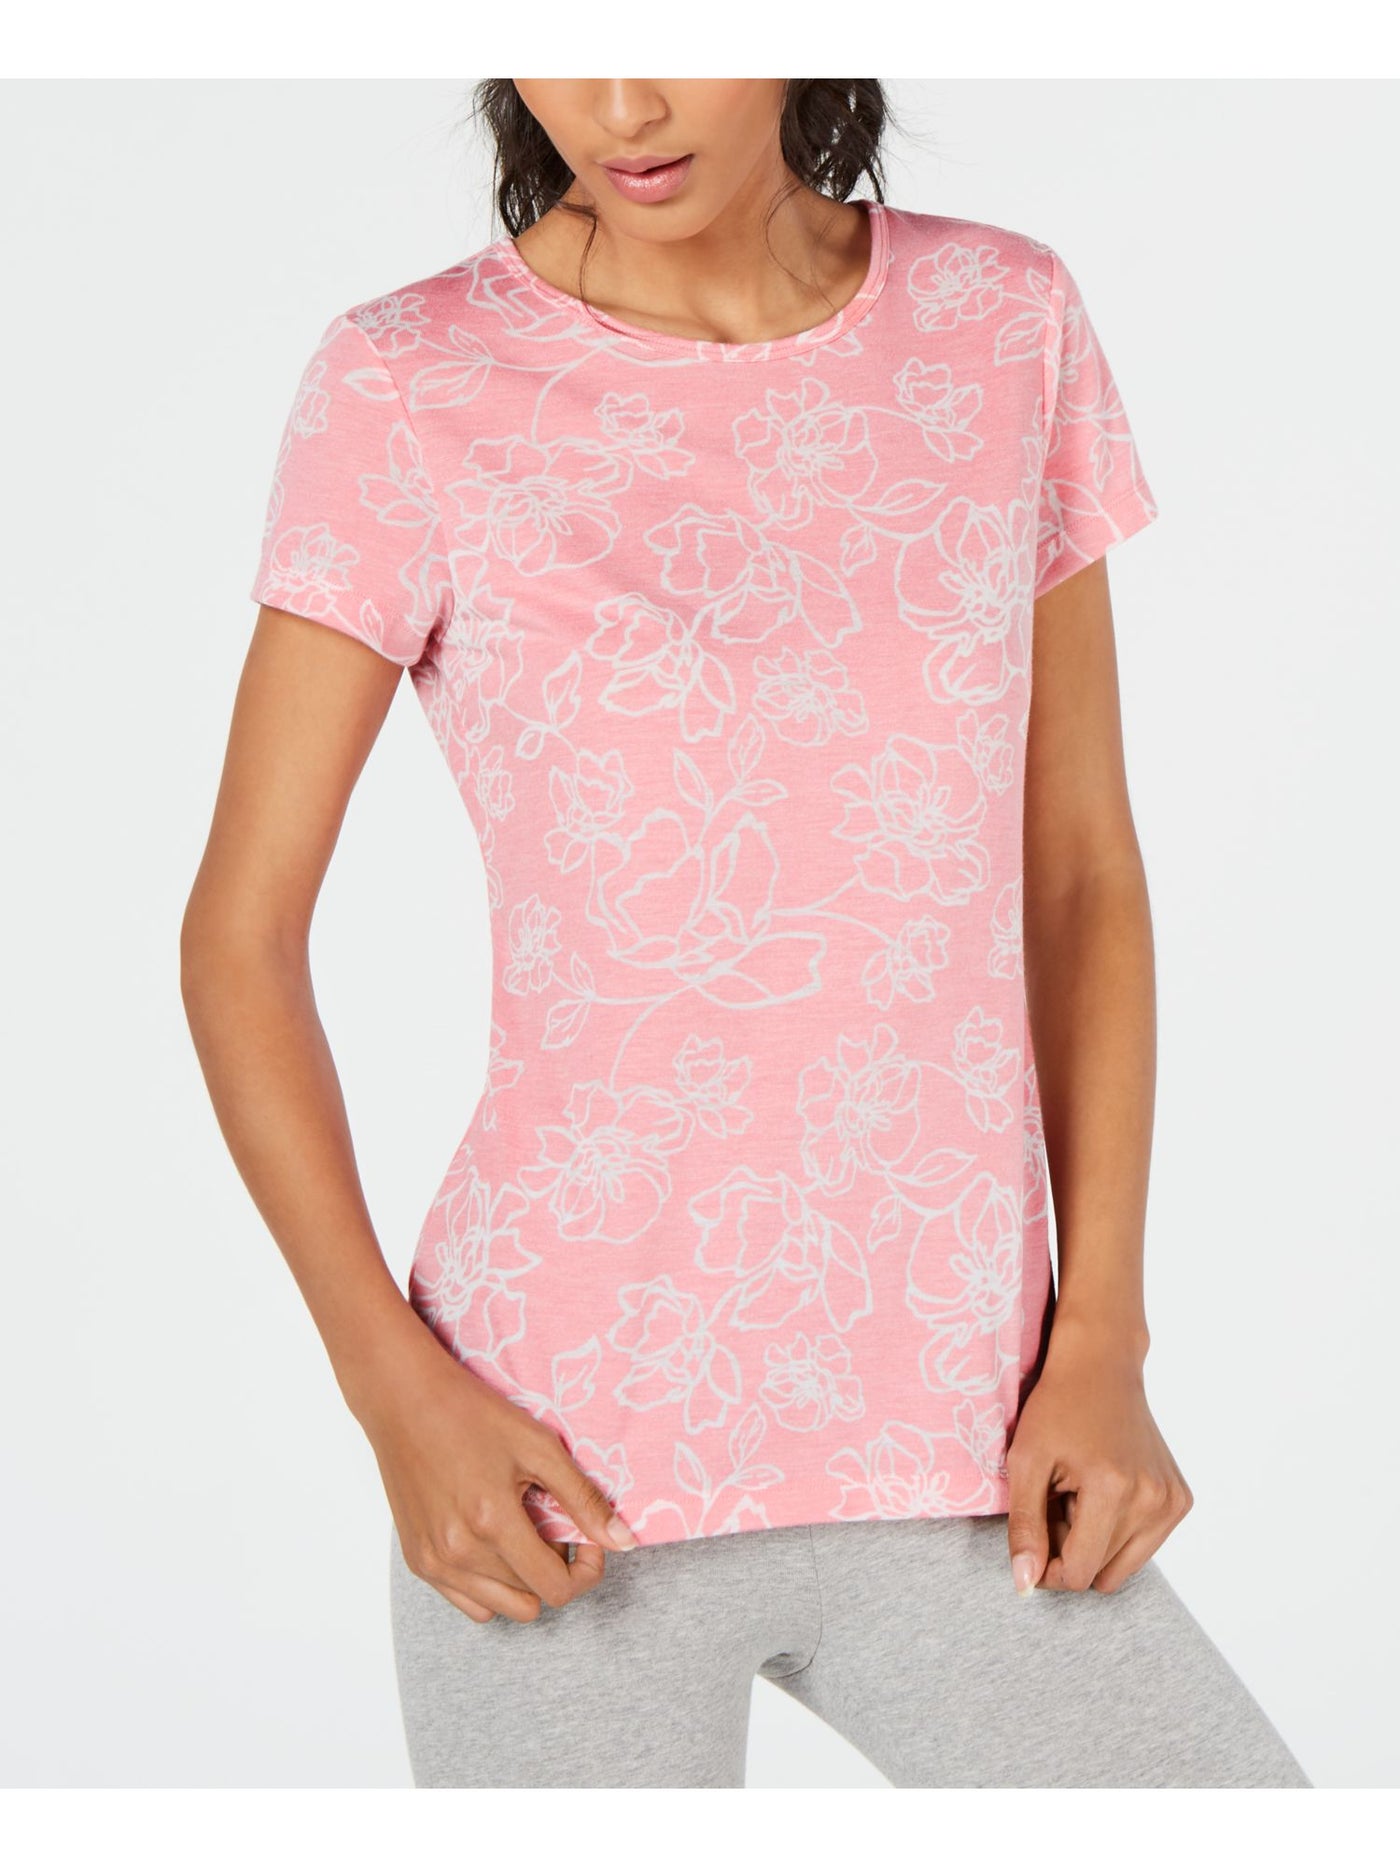 IDEOLOGY Womens Pink Floral Short Sleeve Jewel Neck T-Shirt XS